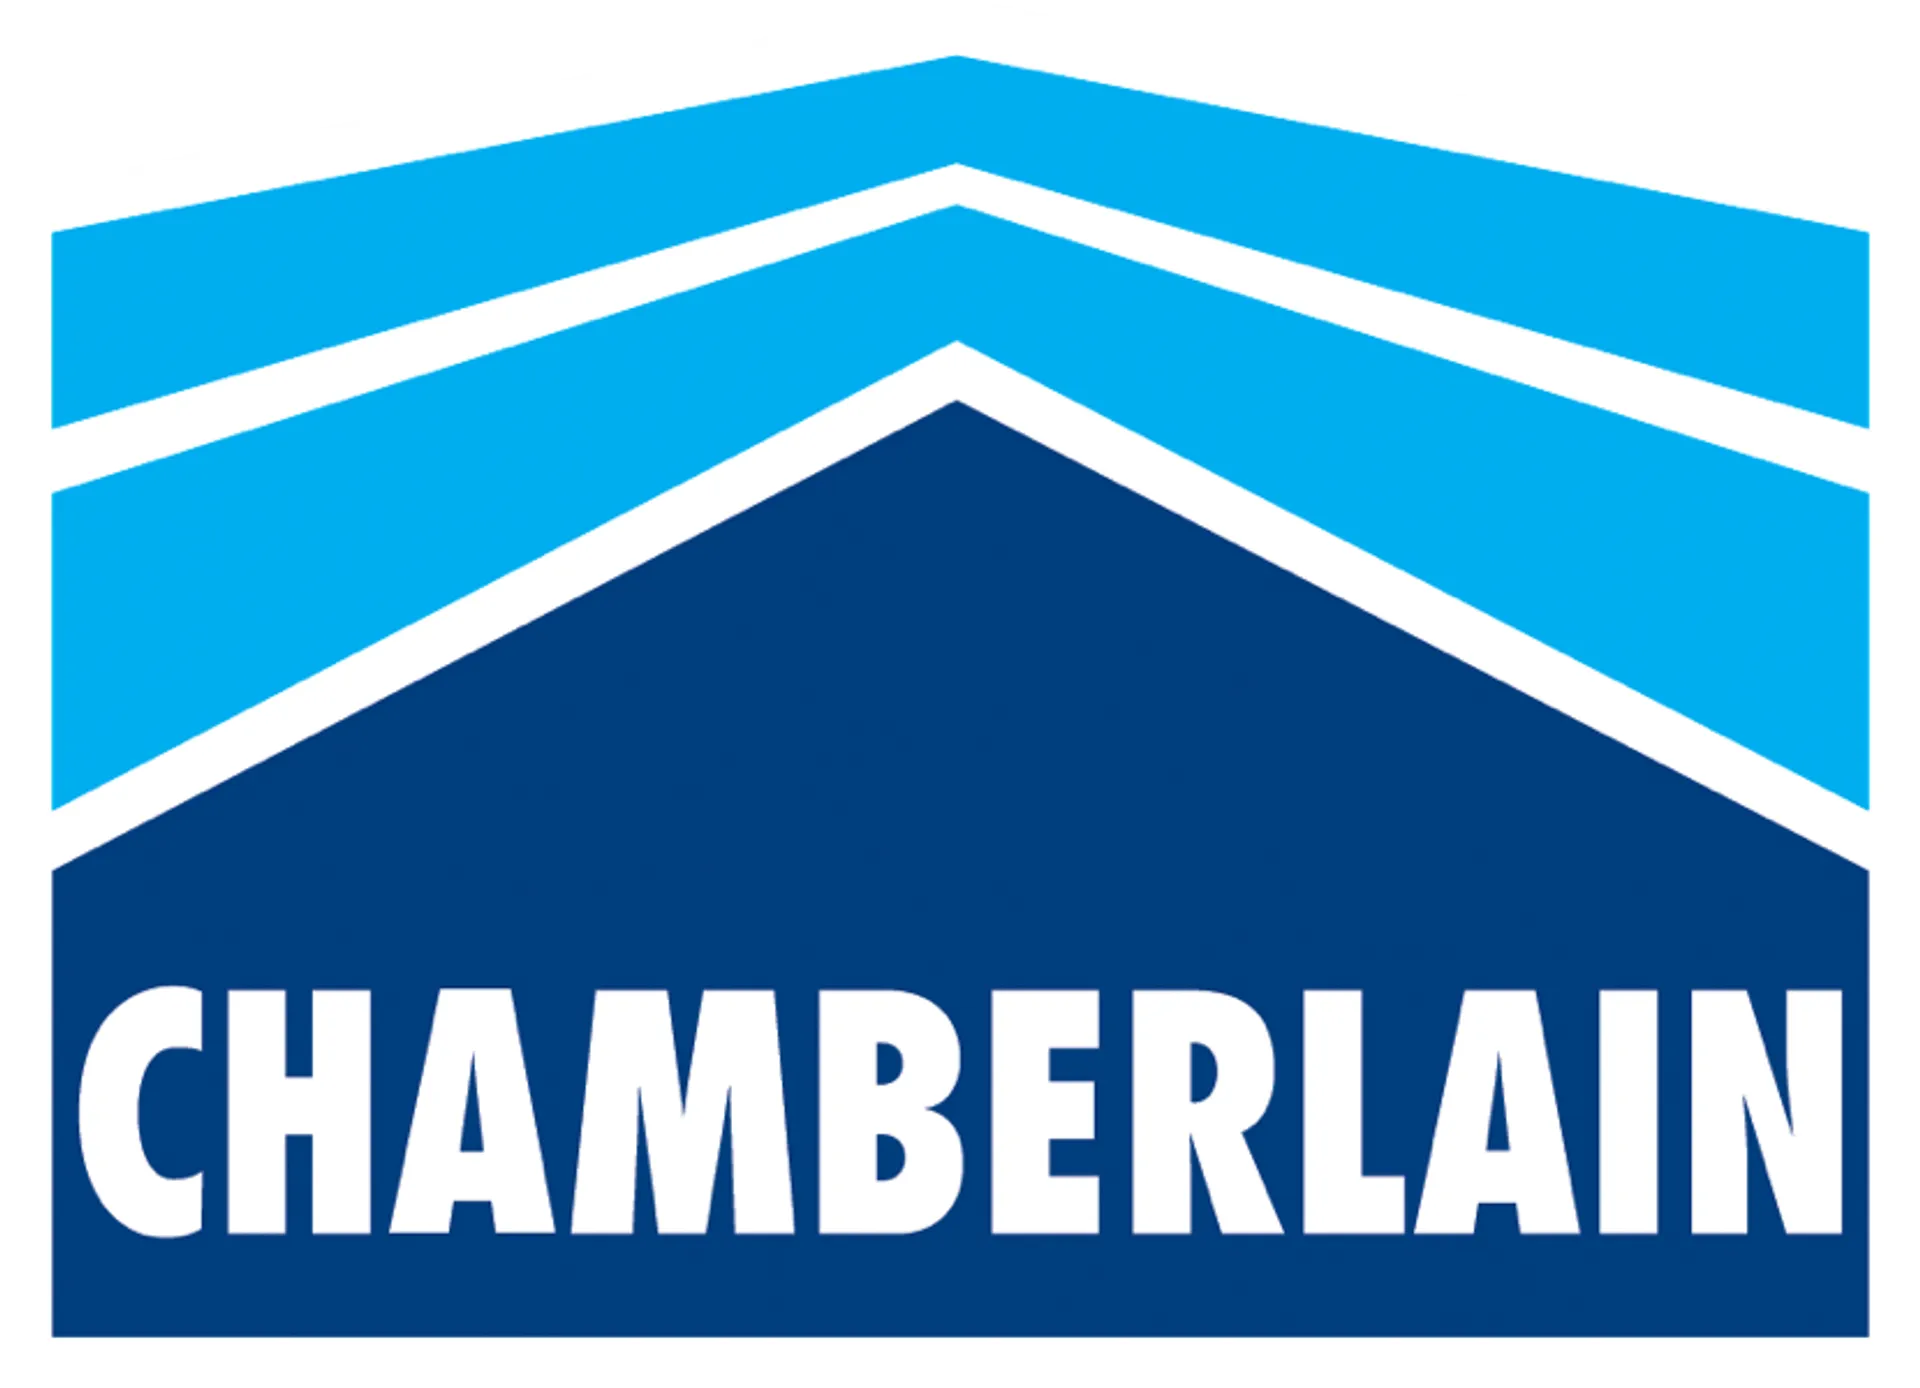 CHAMBERLAIN logo